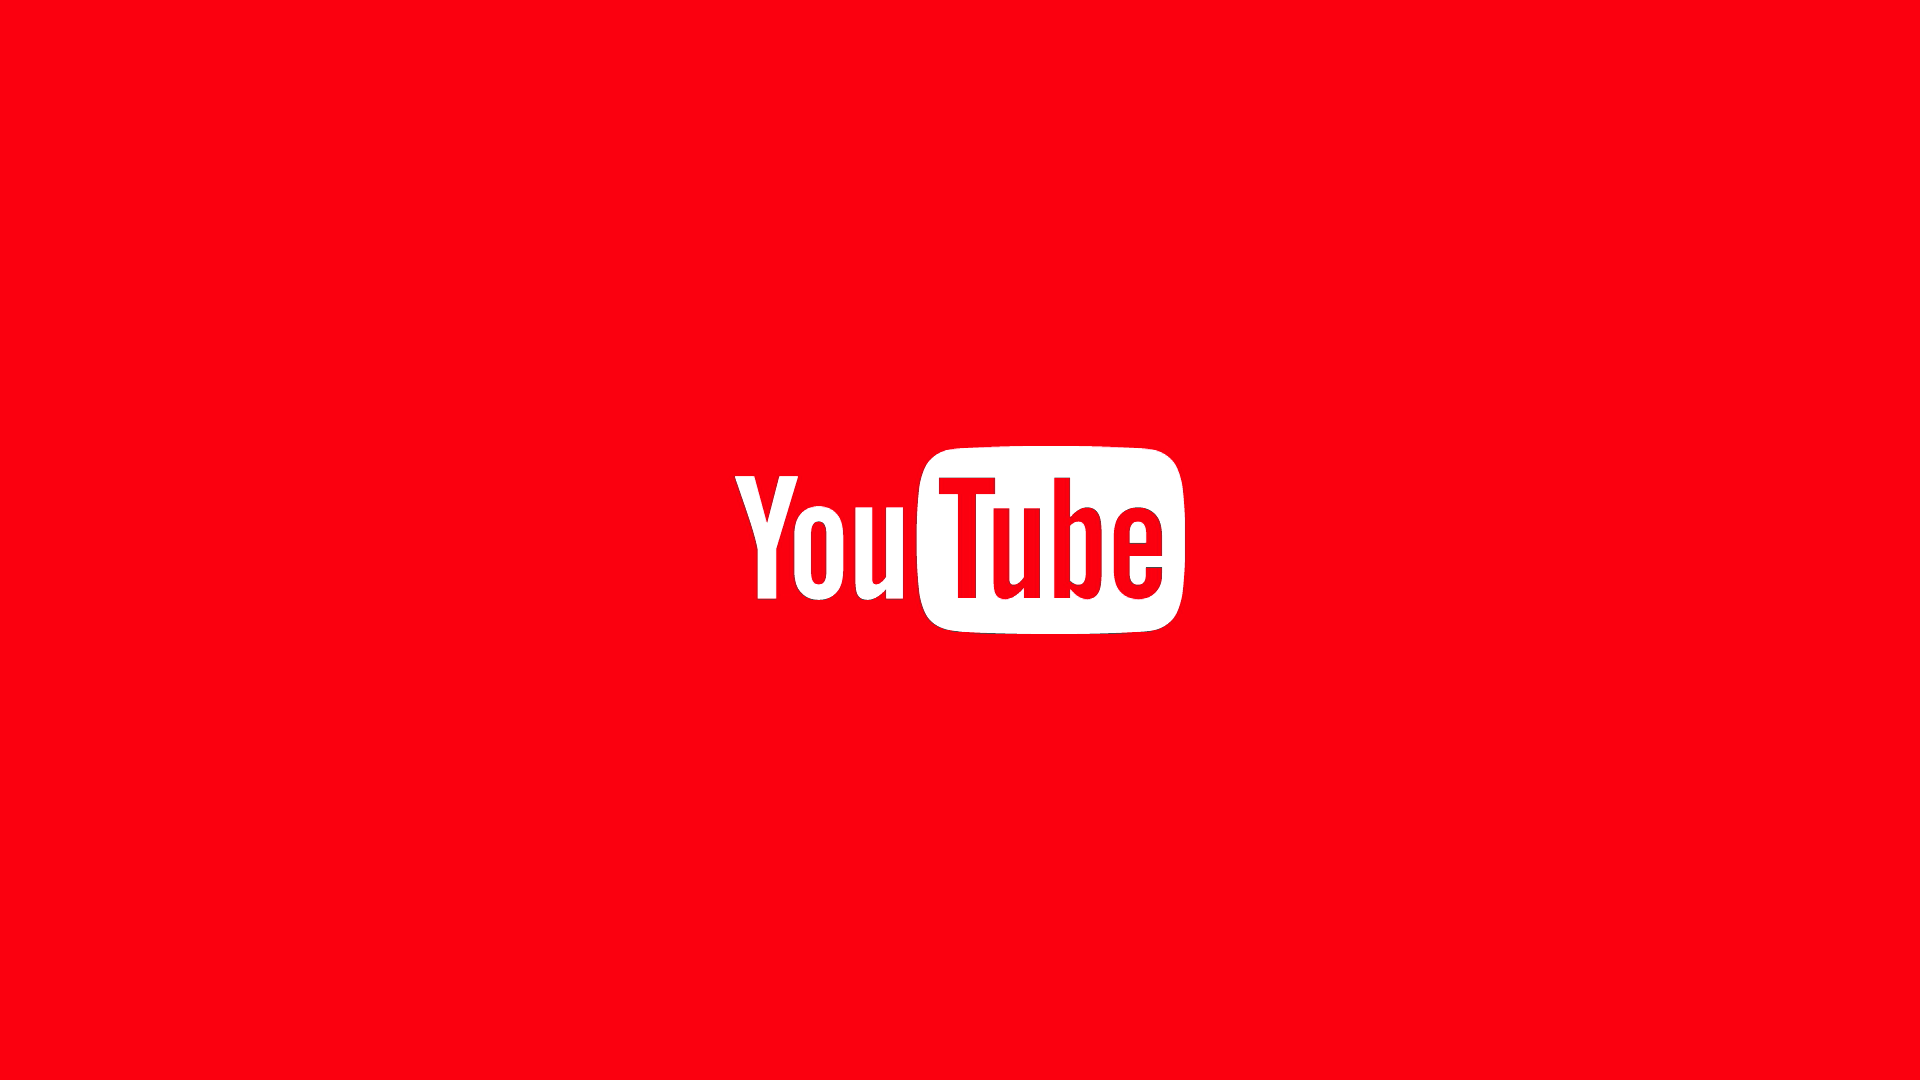 YouTube မှ အန္တရာယ်များပြီး စိတ်ထိခိုက်မှုရစေသော နောက်ပြောင်မှုများကို Video ရိုက်တင်ခြင်းအား သူတို့၏ platform ပေါ်တွင် တားမြစ် 